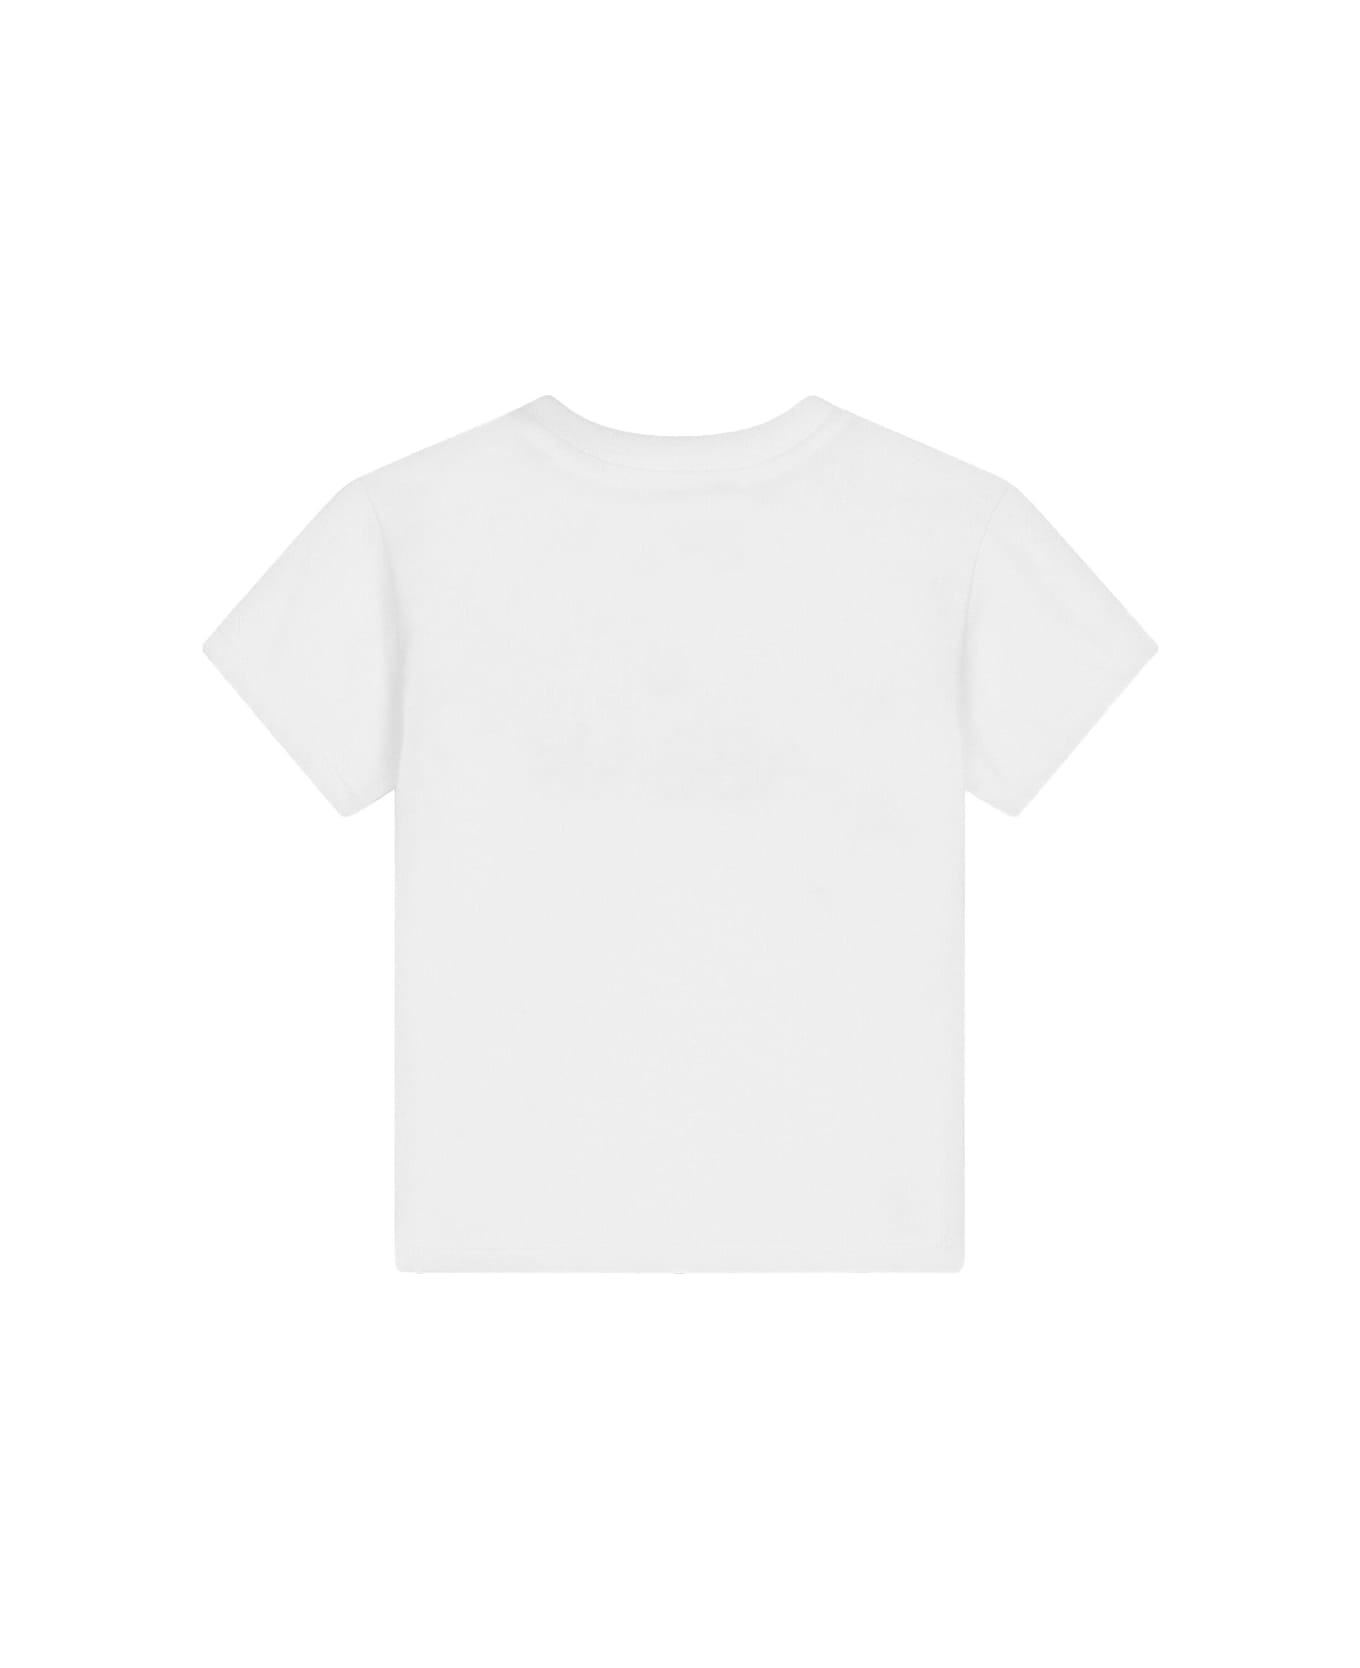 Dolce & Gabbana Logo Print Jersey T-shirt - White